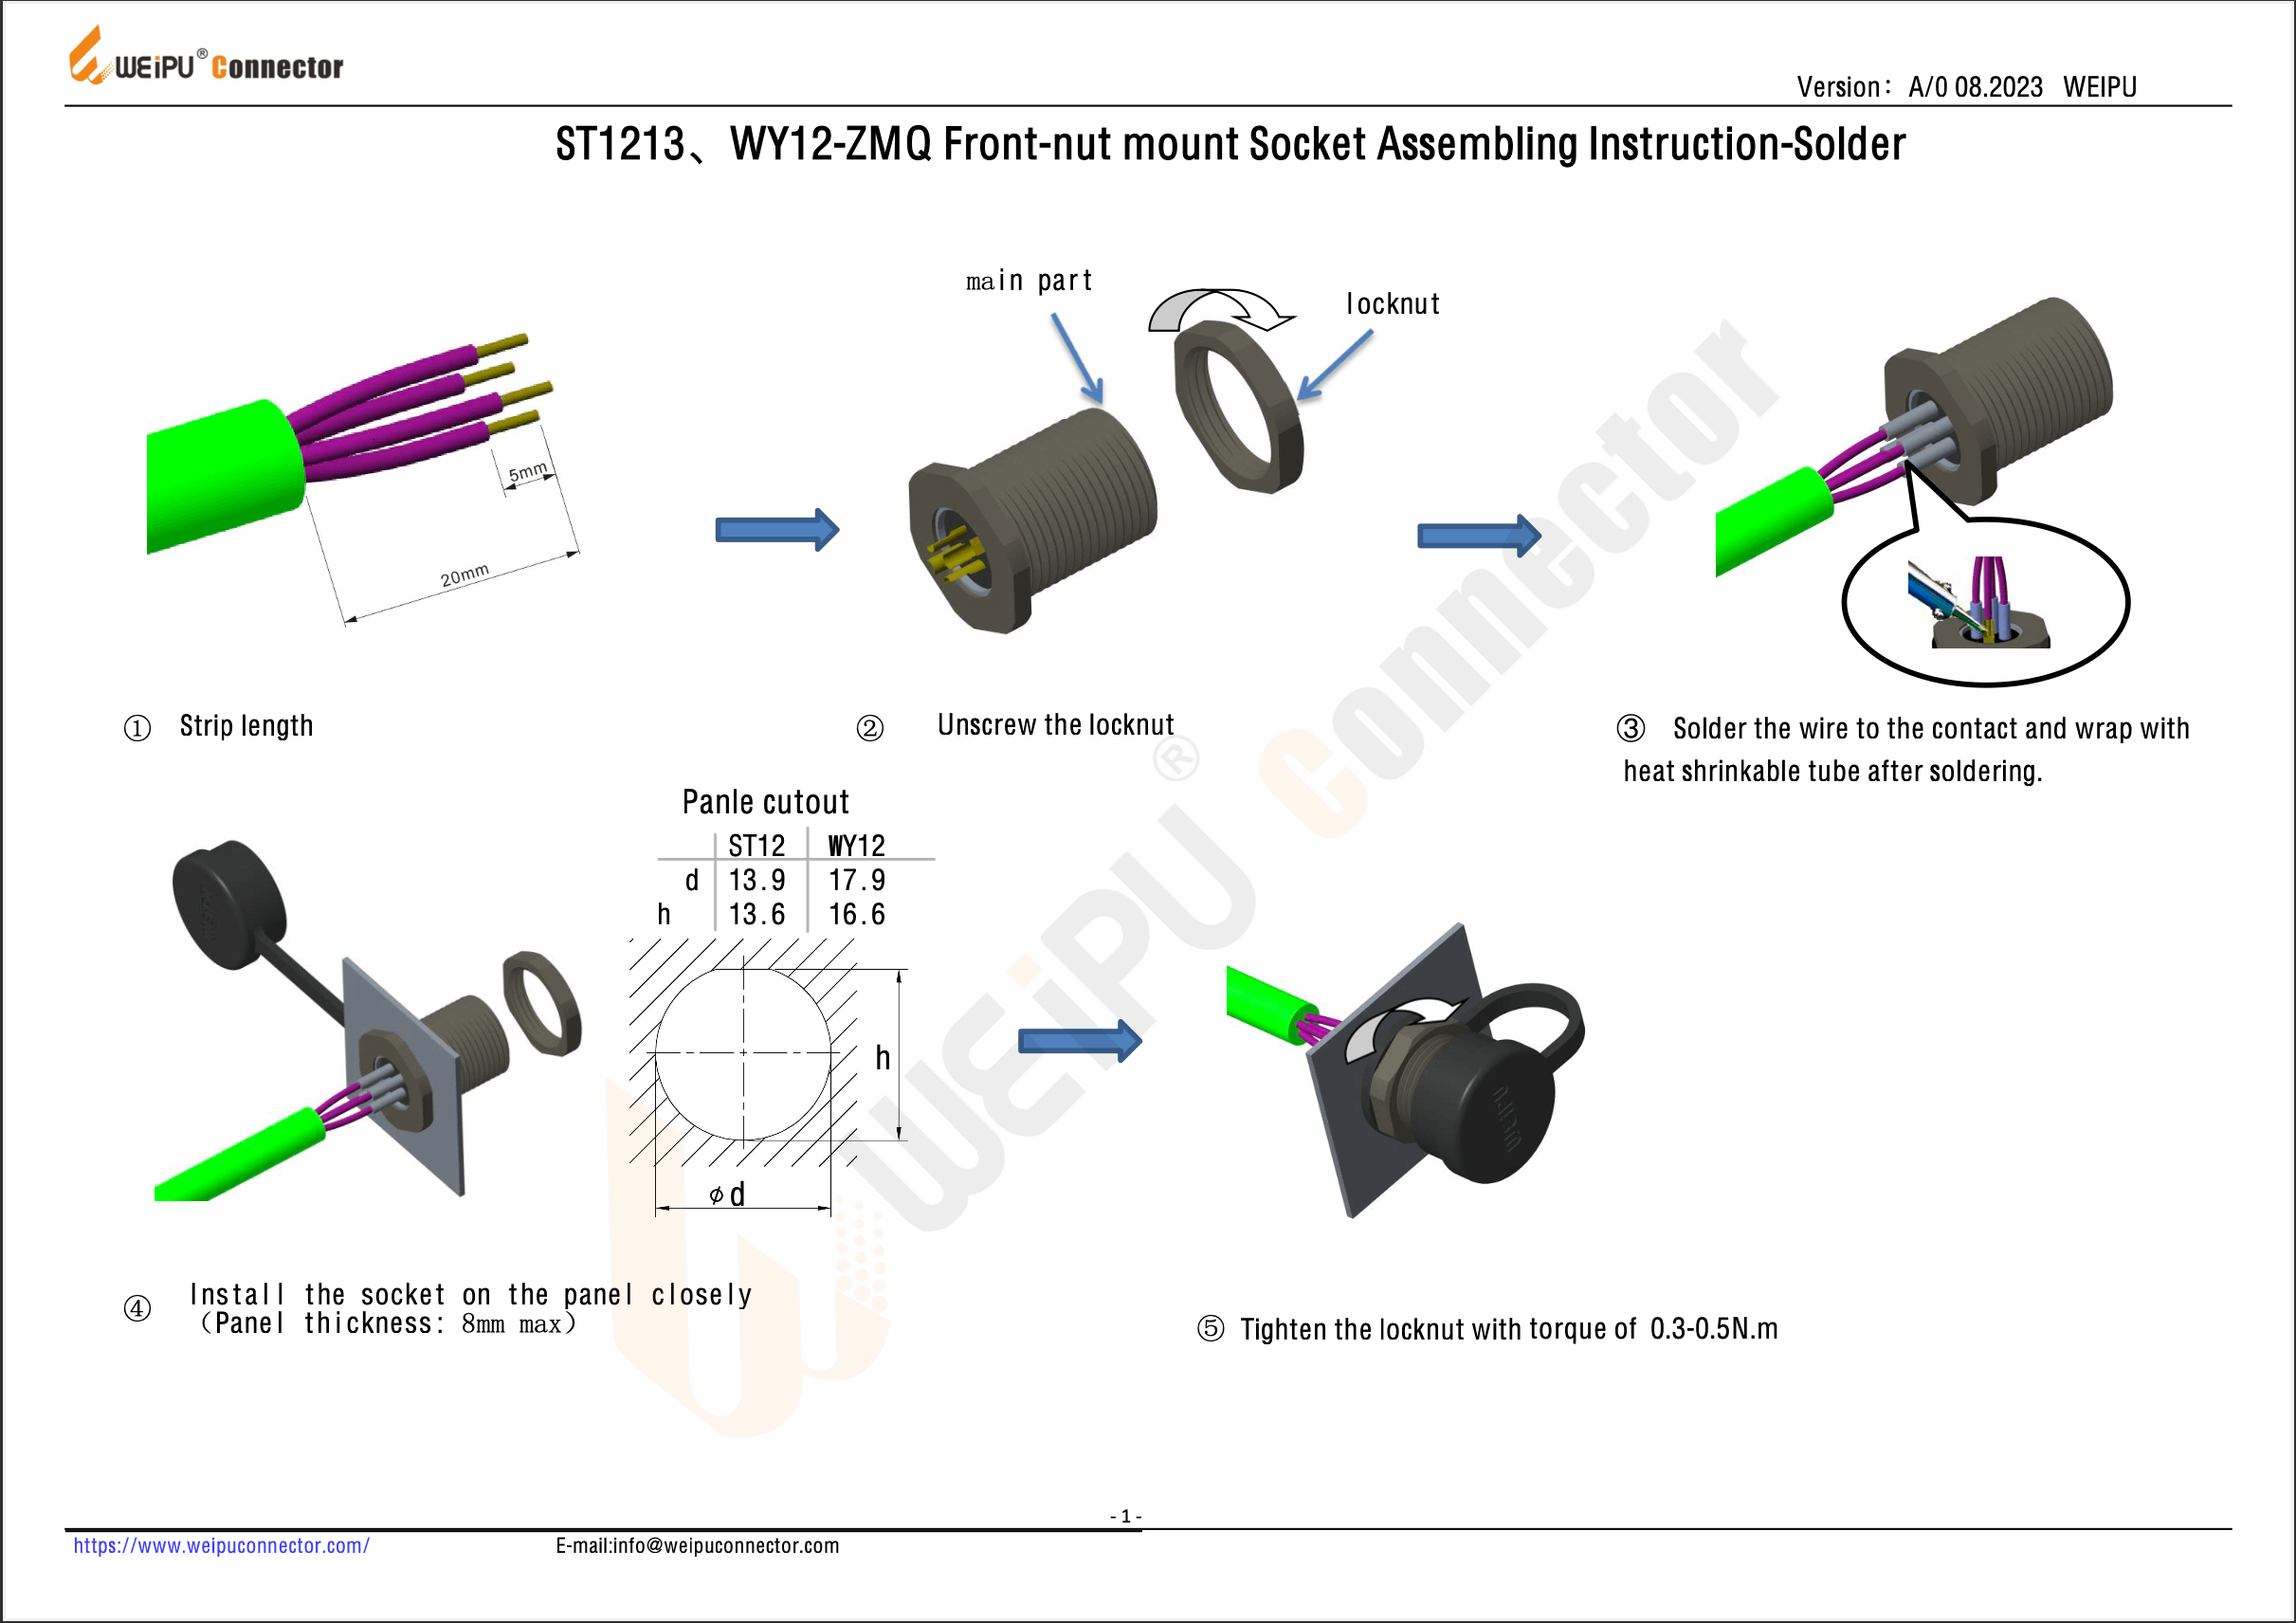 ST1213 & WY12-ZMQ Front-nut Mount Socket Assembling Instruction